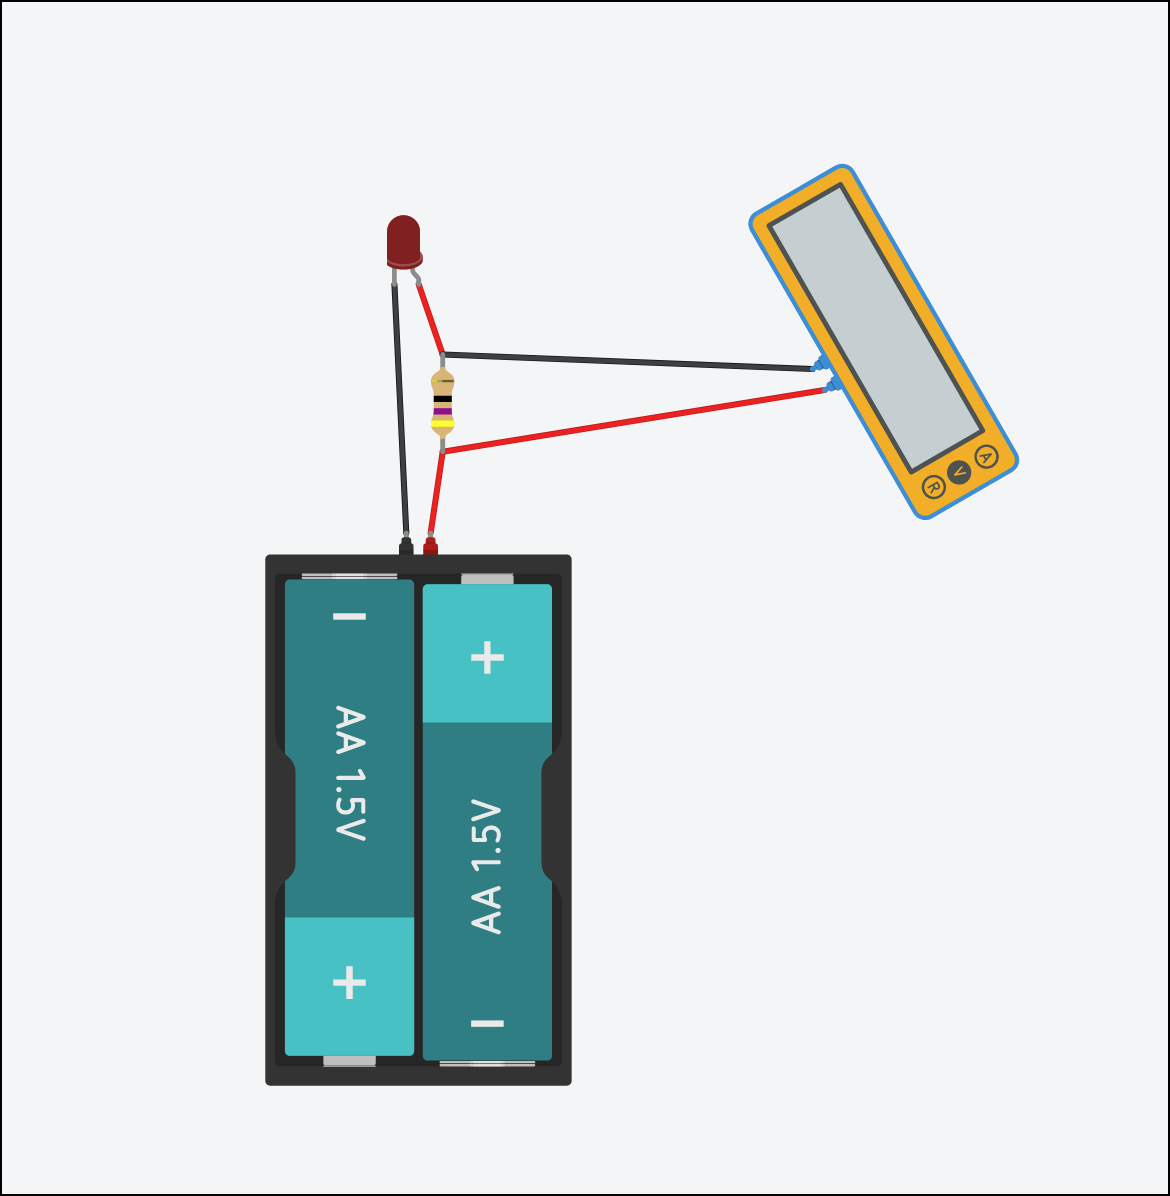 Measure voltage across the resistor